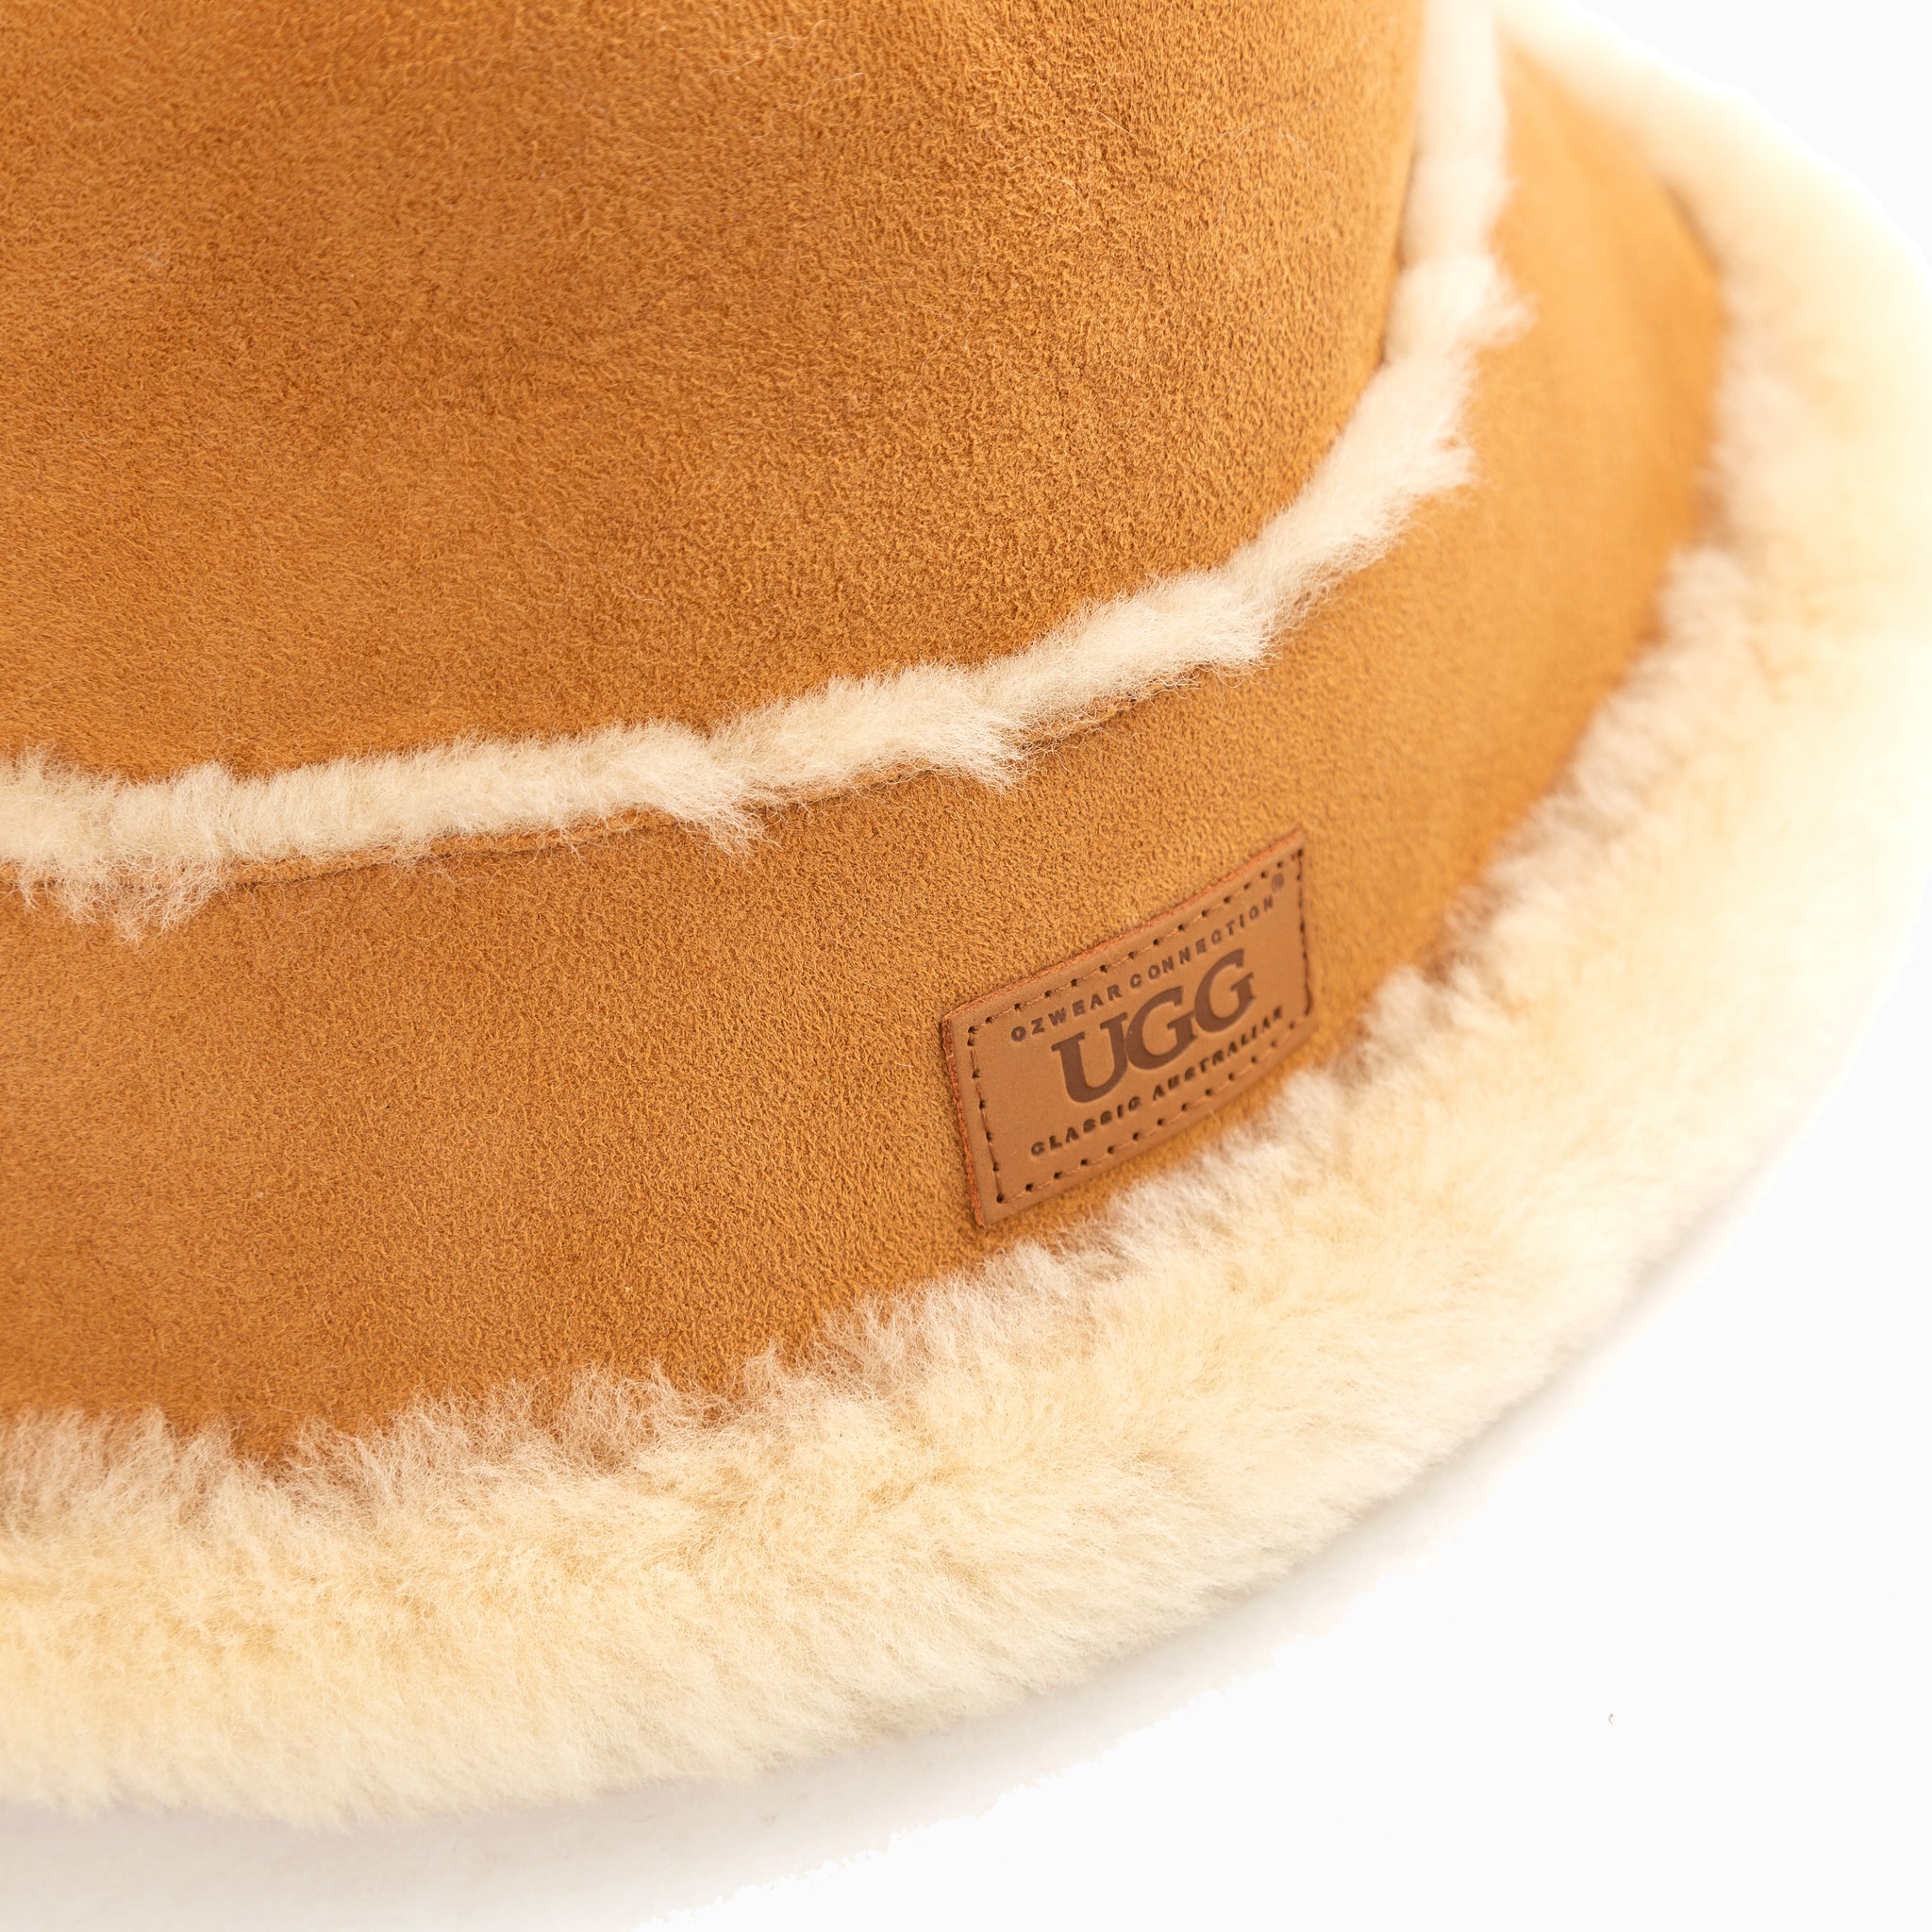 Ugg Sheepskin Bucket Hat